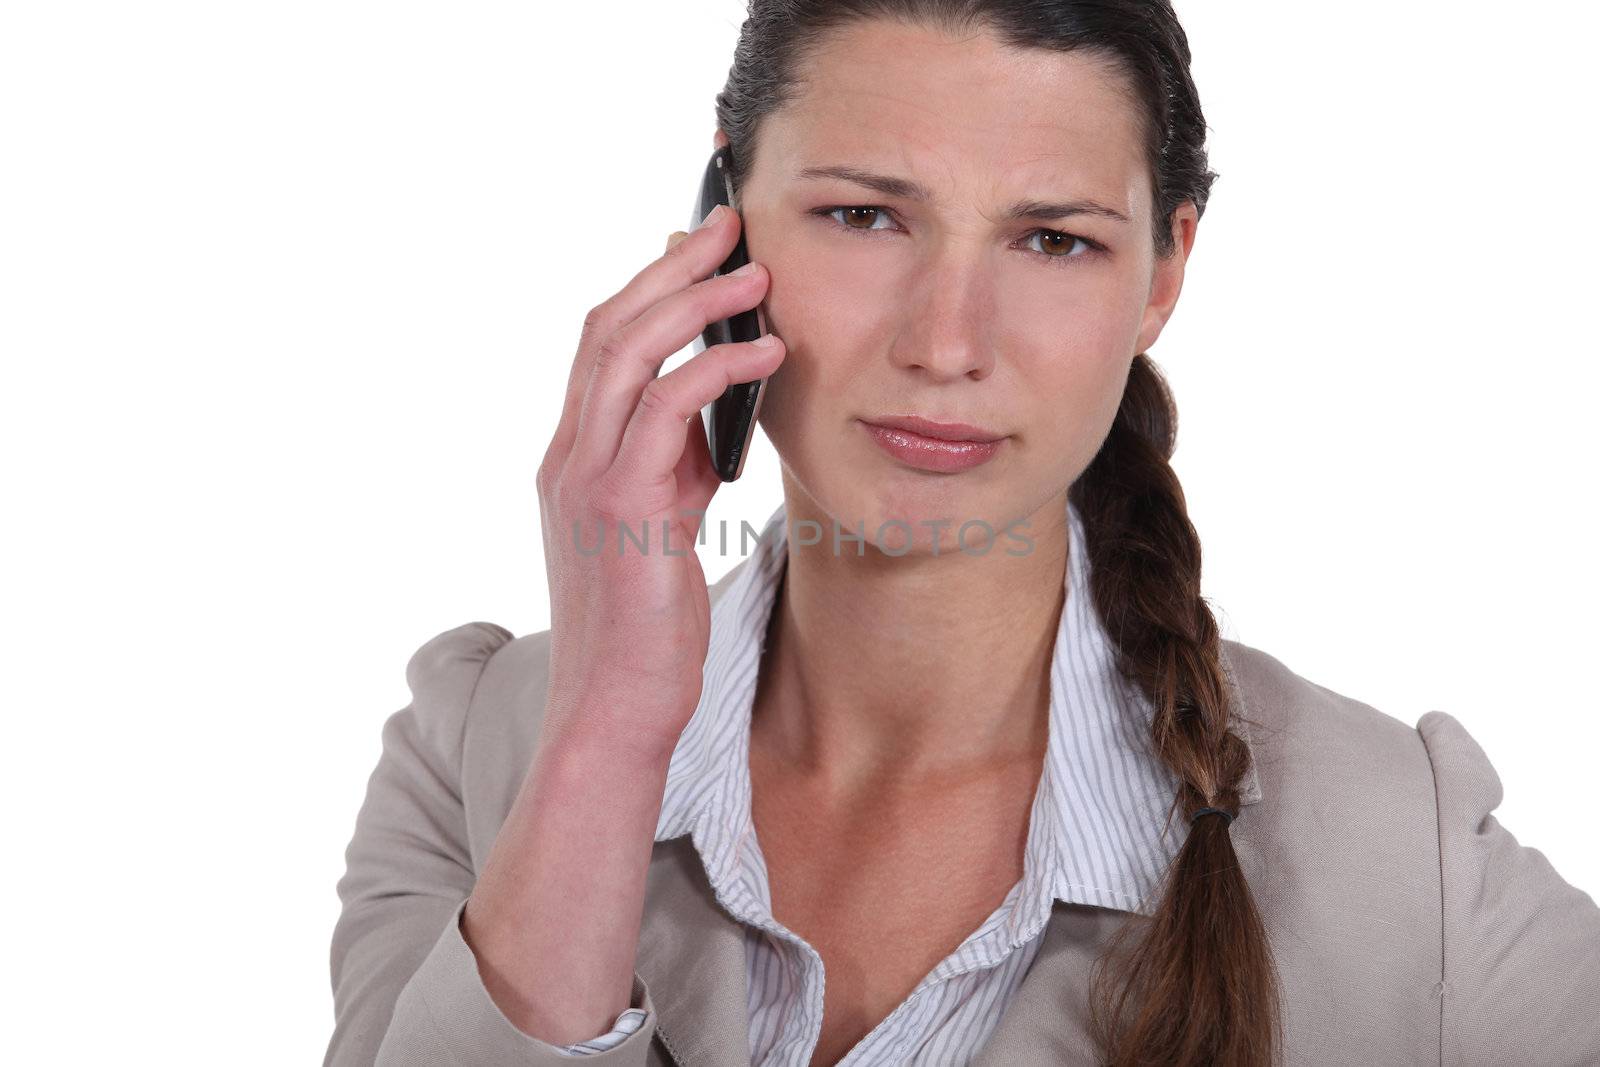 Women on the phone